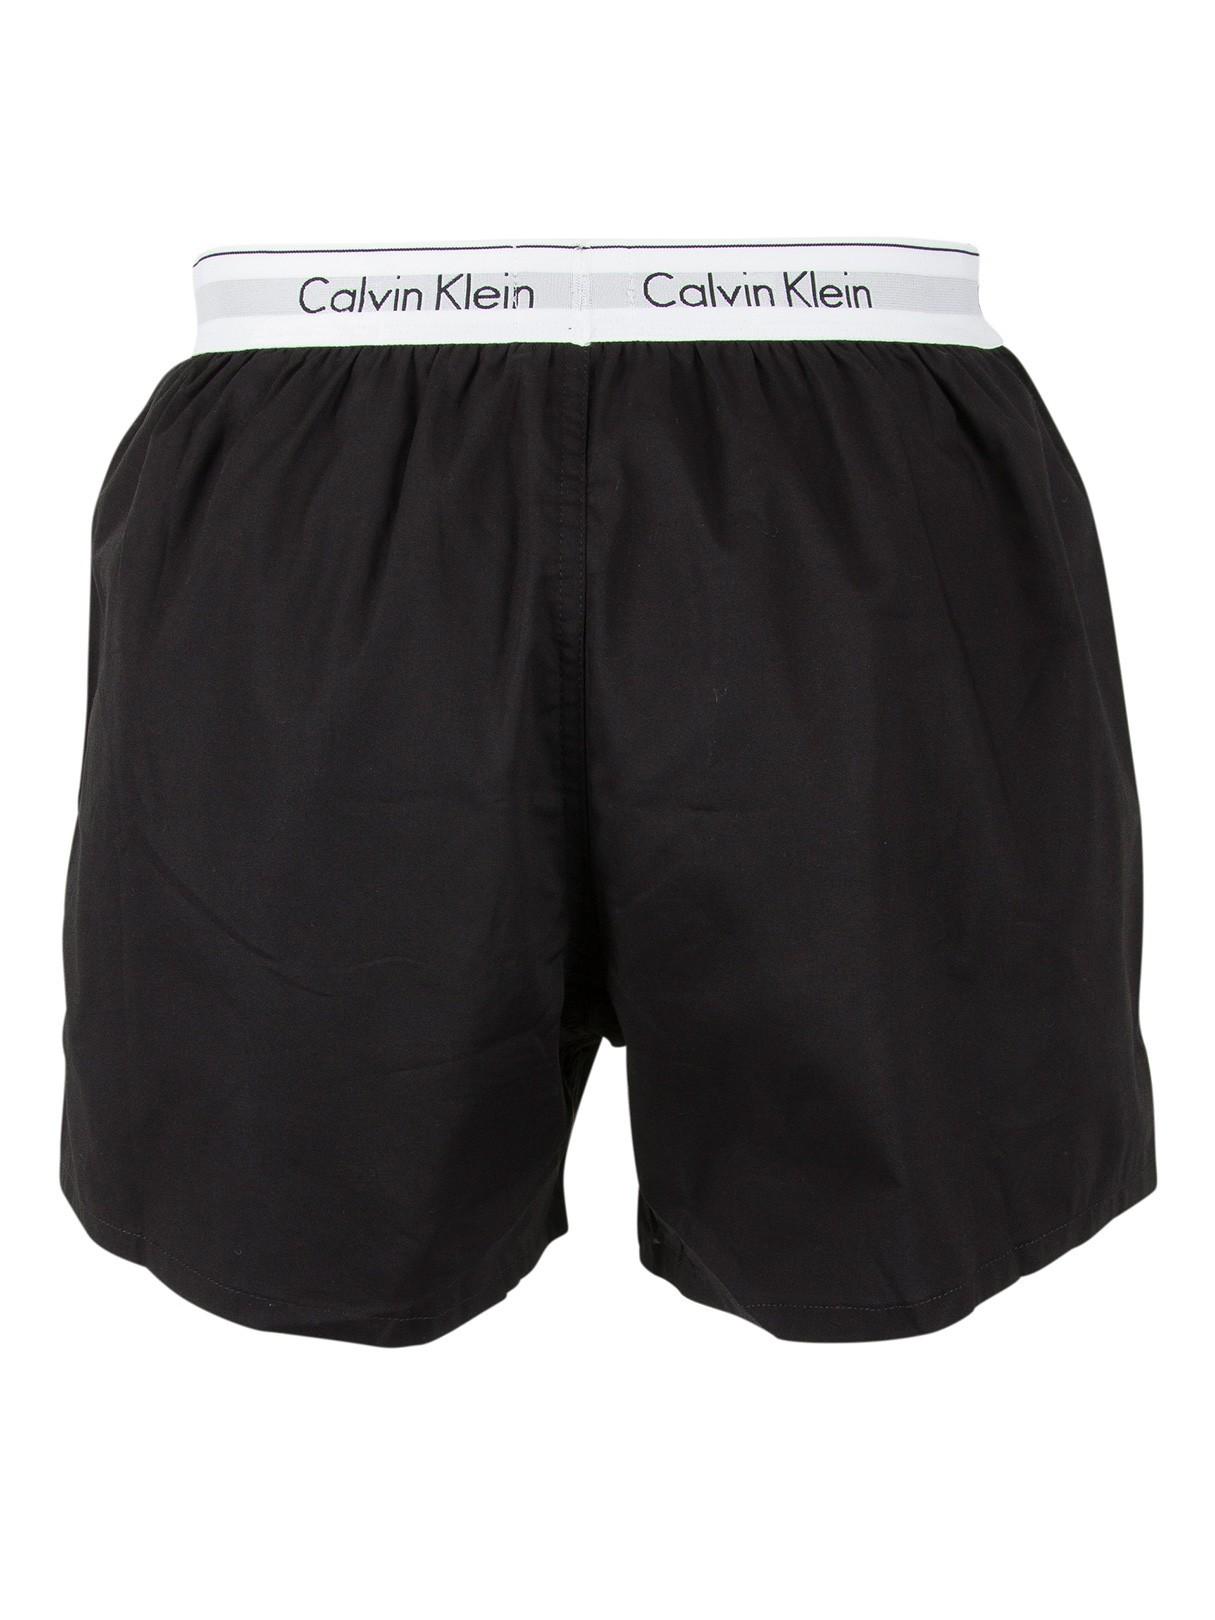 Calvin Klein 2 Pack Logo Slim Fit Woven Boxers in Black for Men